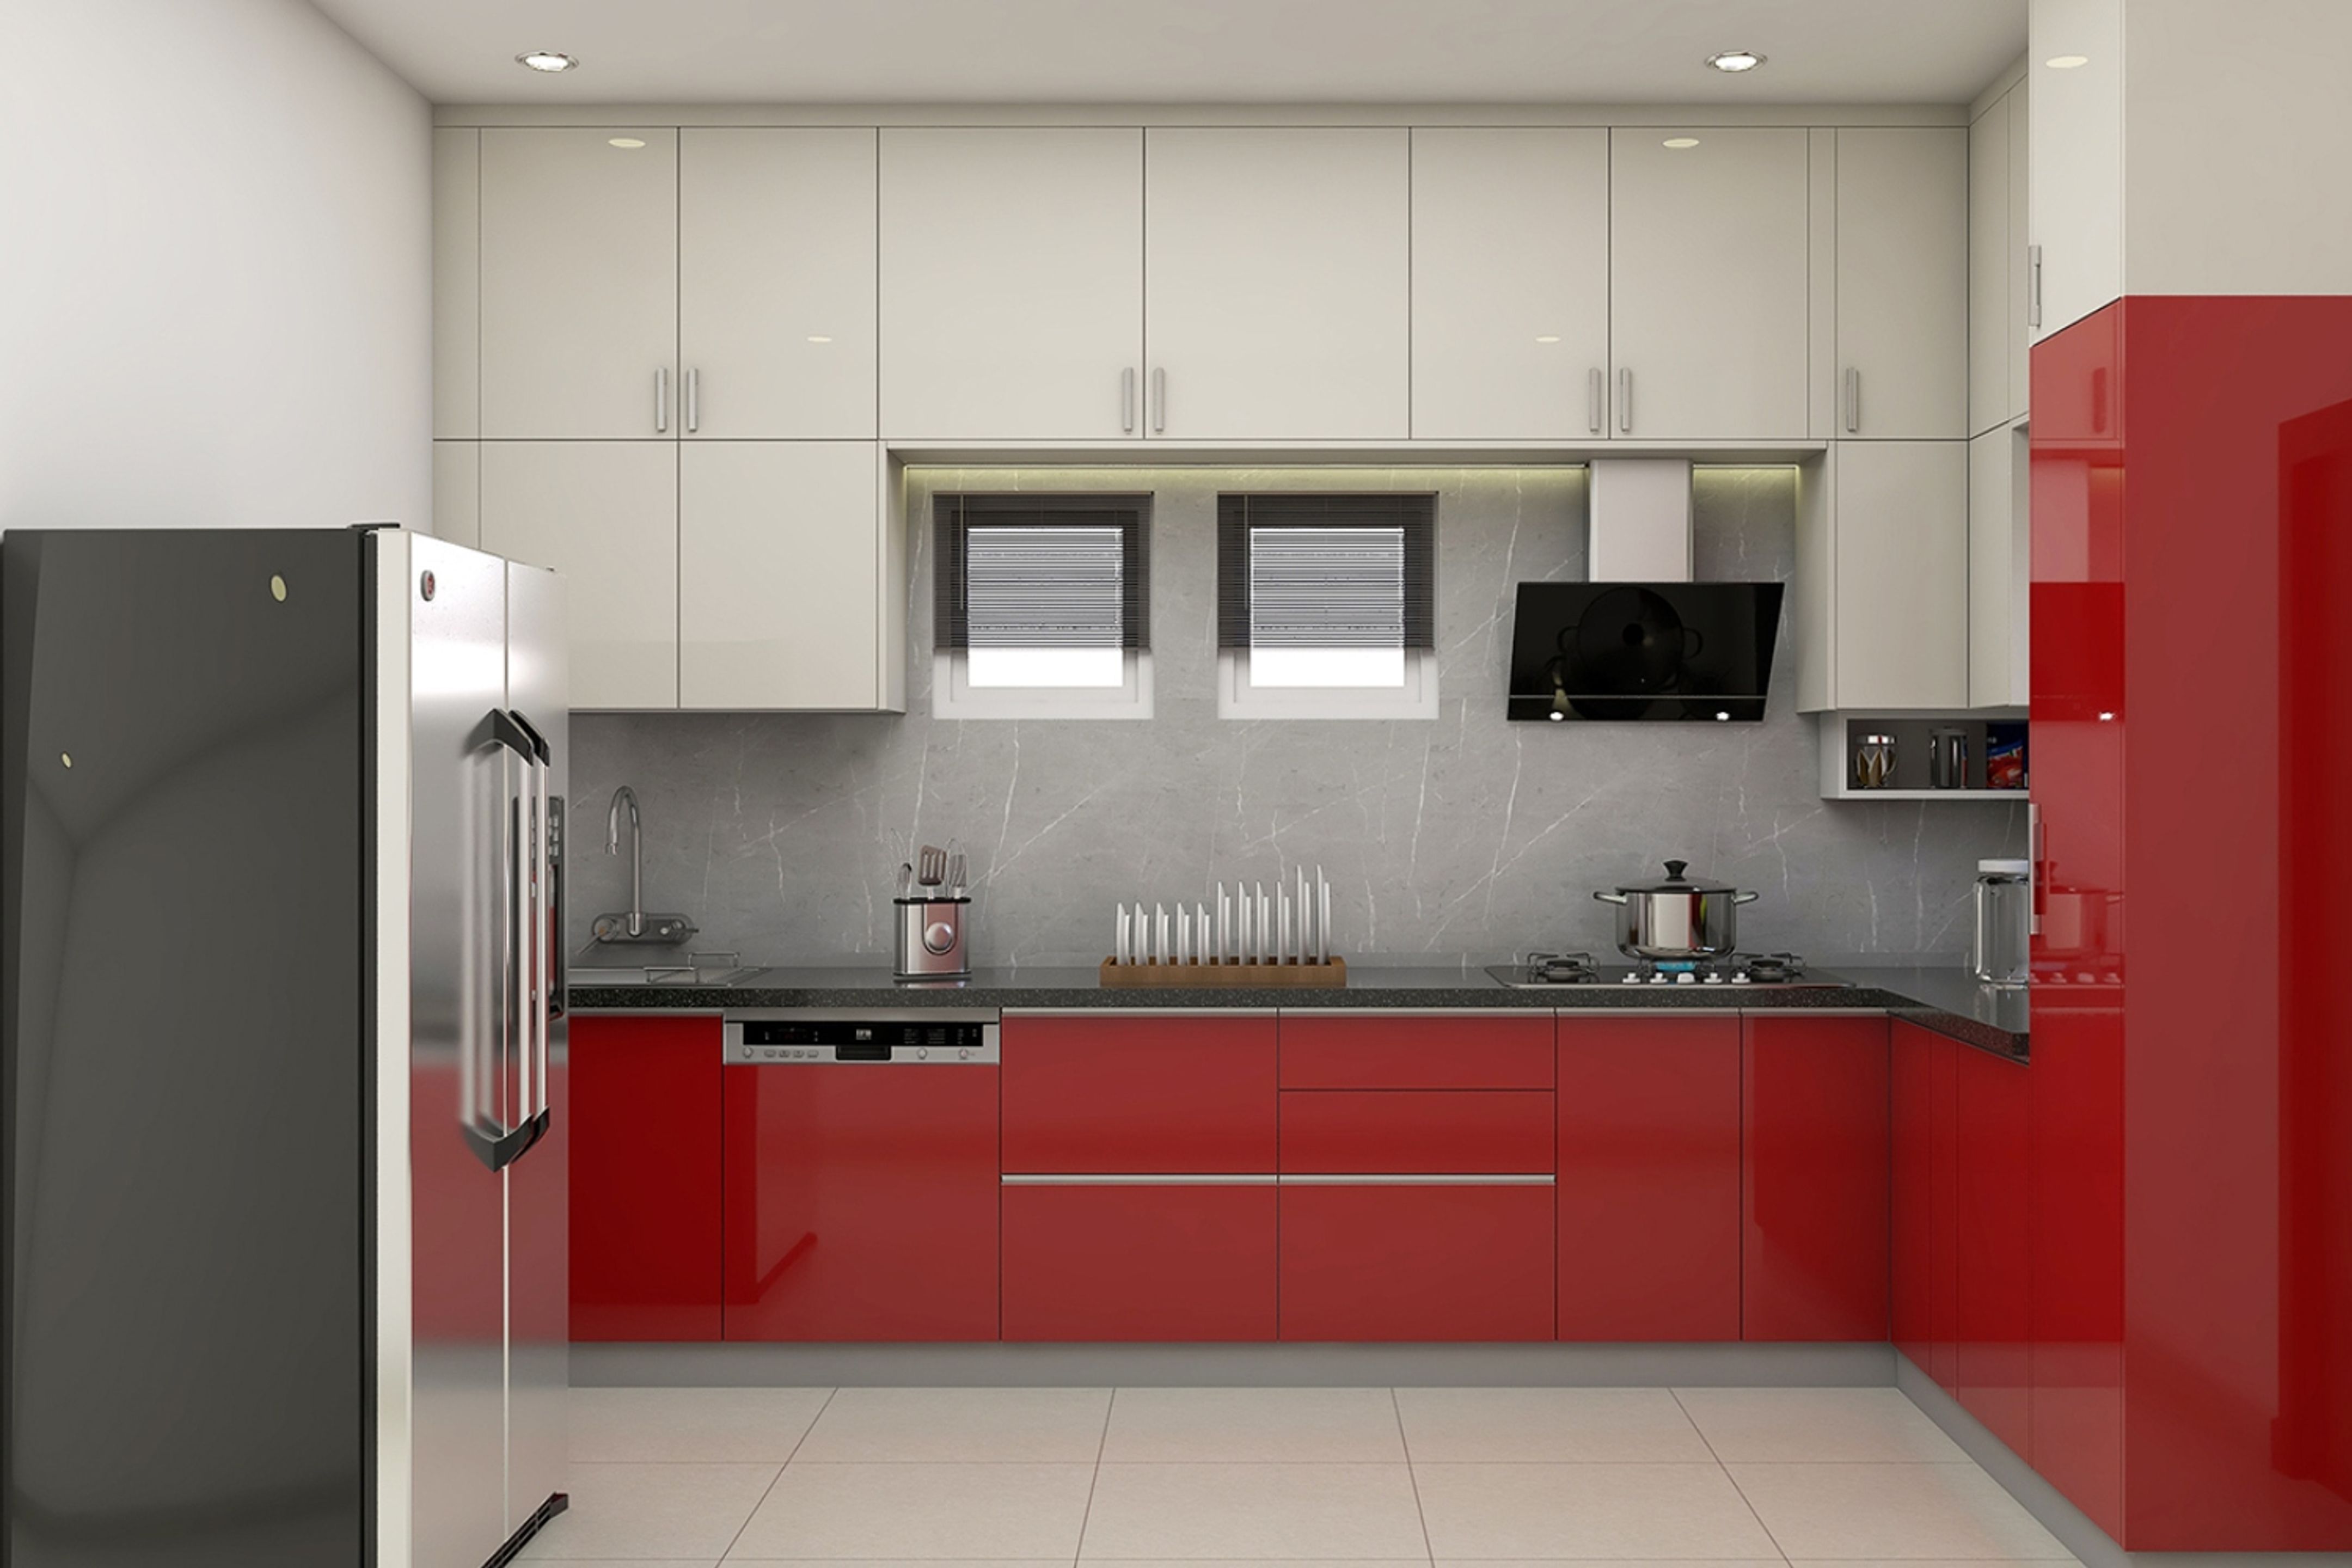 Modular Kitchen Design With Grey Backsplash Tiles - 13X11 Ft | Livspace